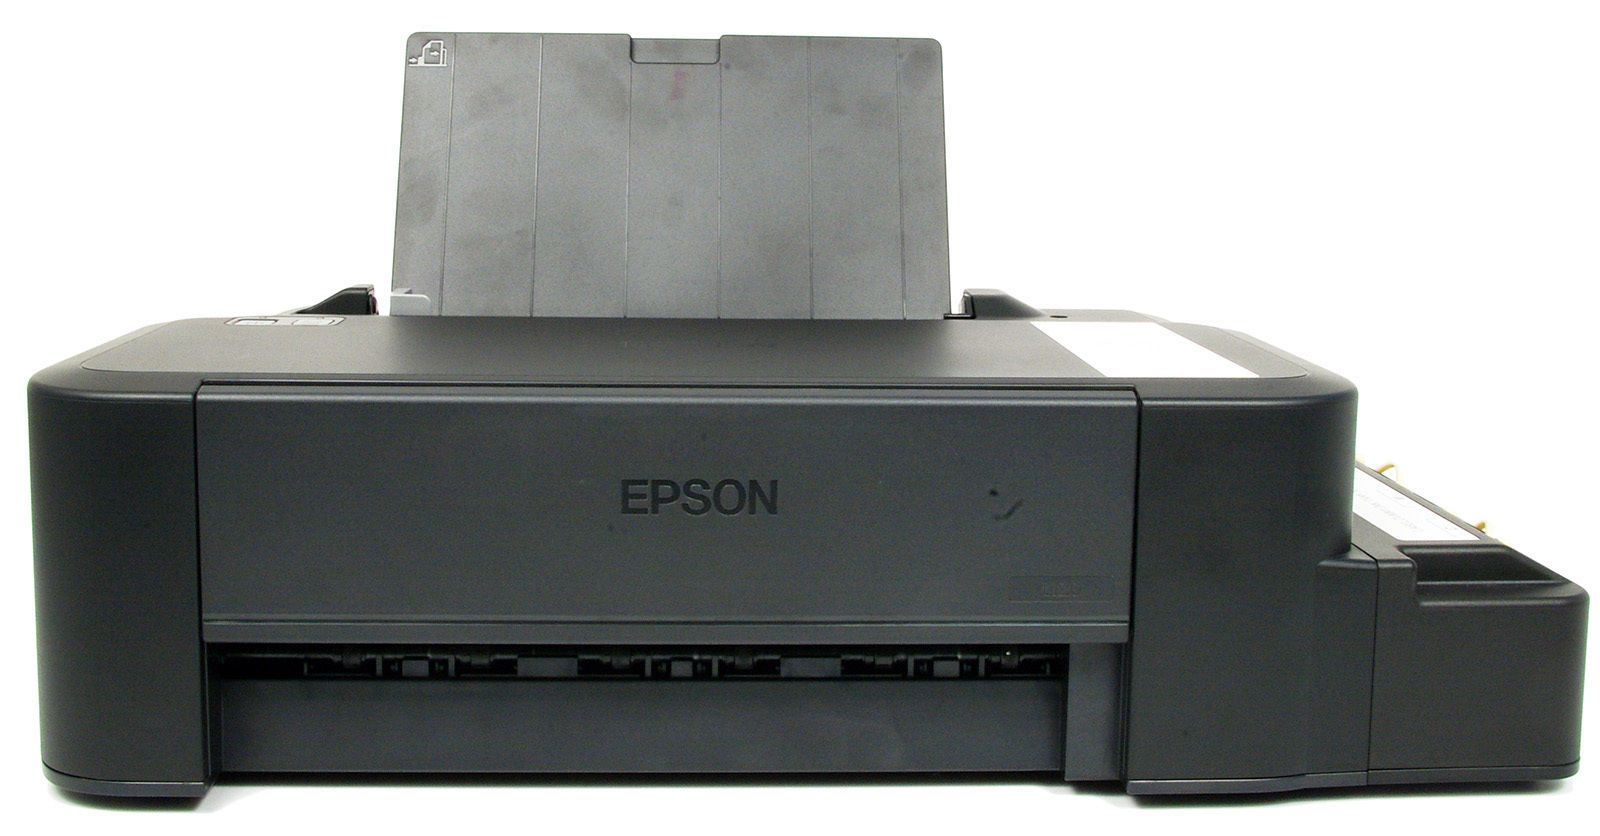 New Original Epson L120 Inkjet Color Ink Tank System Compact Printer Free Ship Ebay 4221